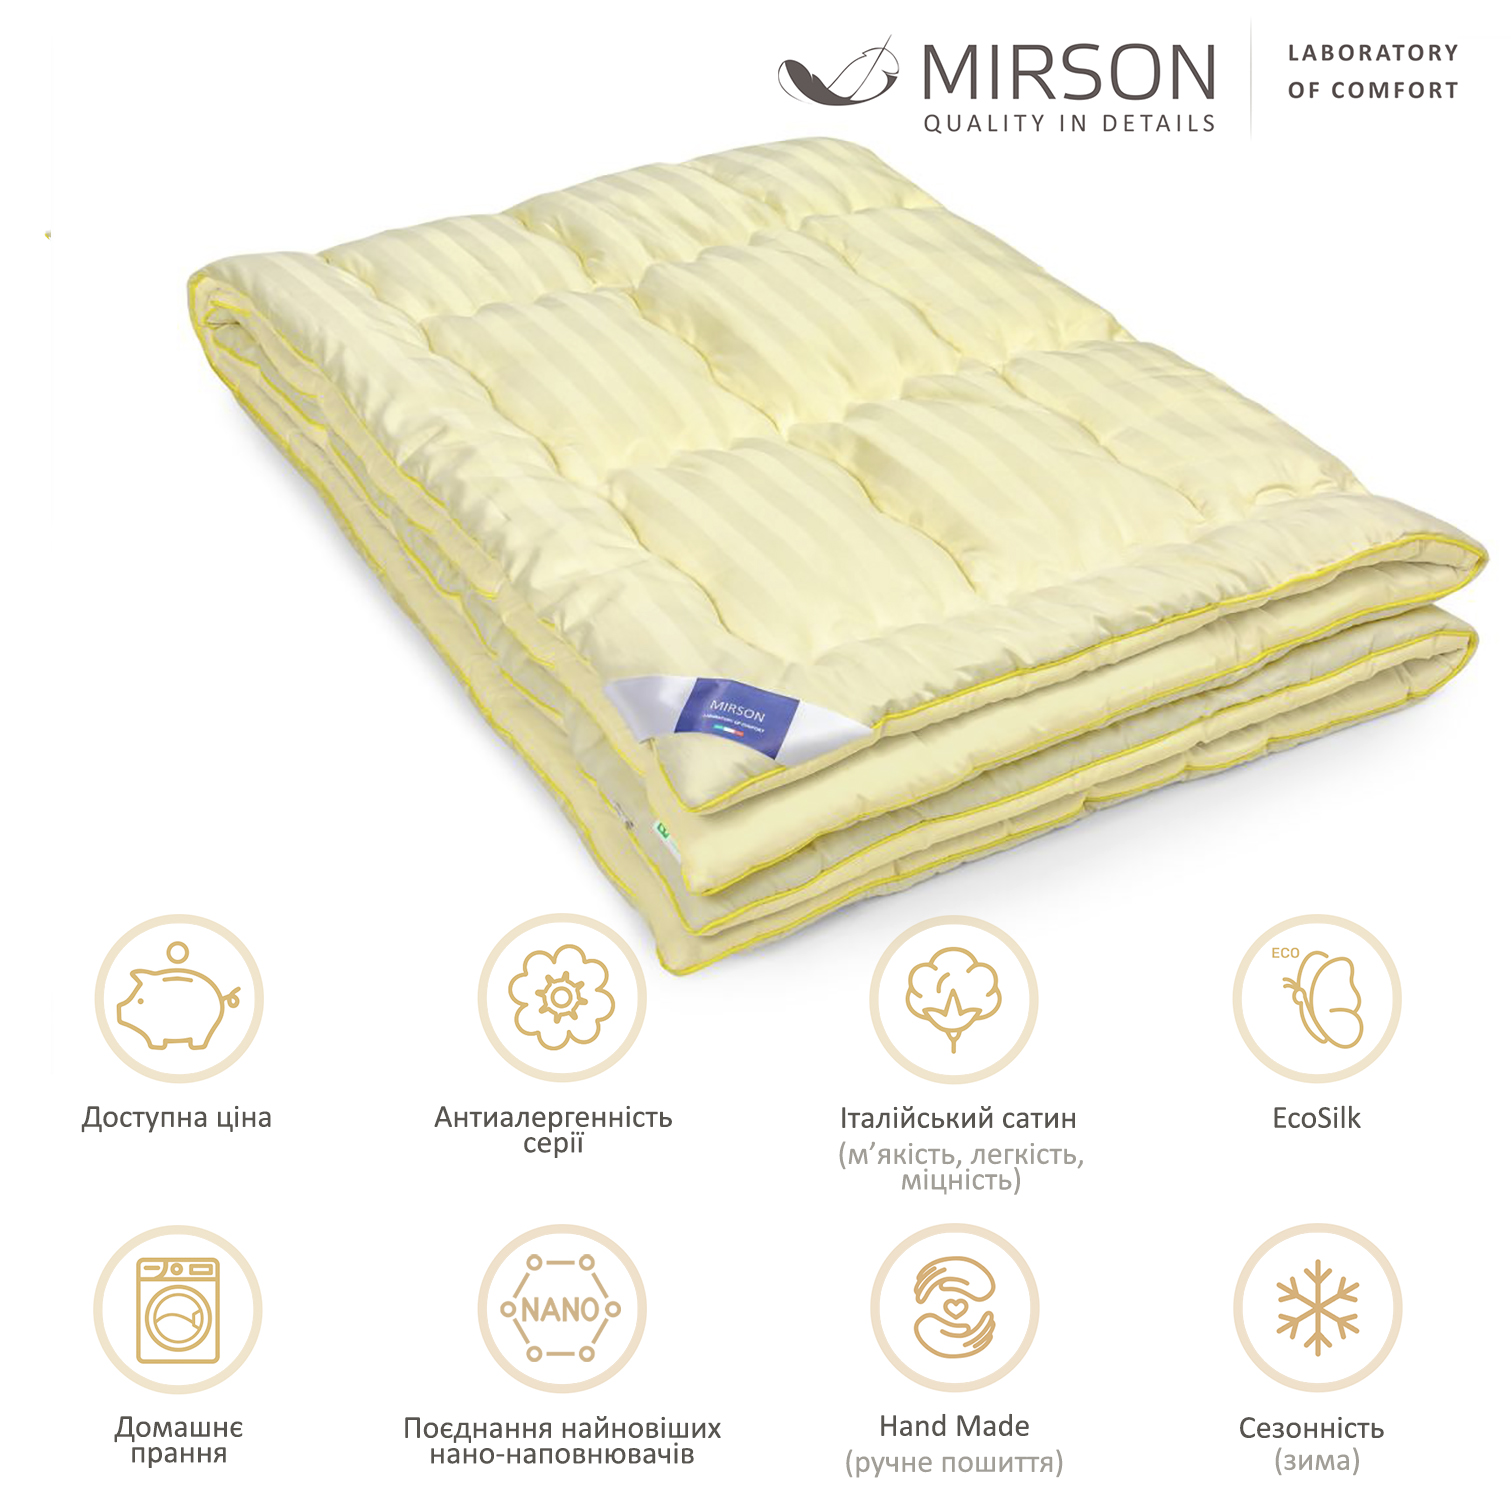 Одеяло антиаллергенное MirSon Carmela Hand Made EcoSilk №068, зимнее, 220x240 см, светло-желтое - фото 4